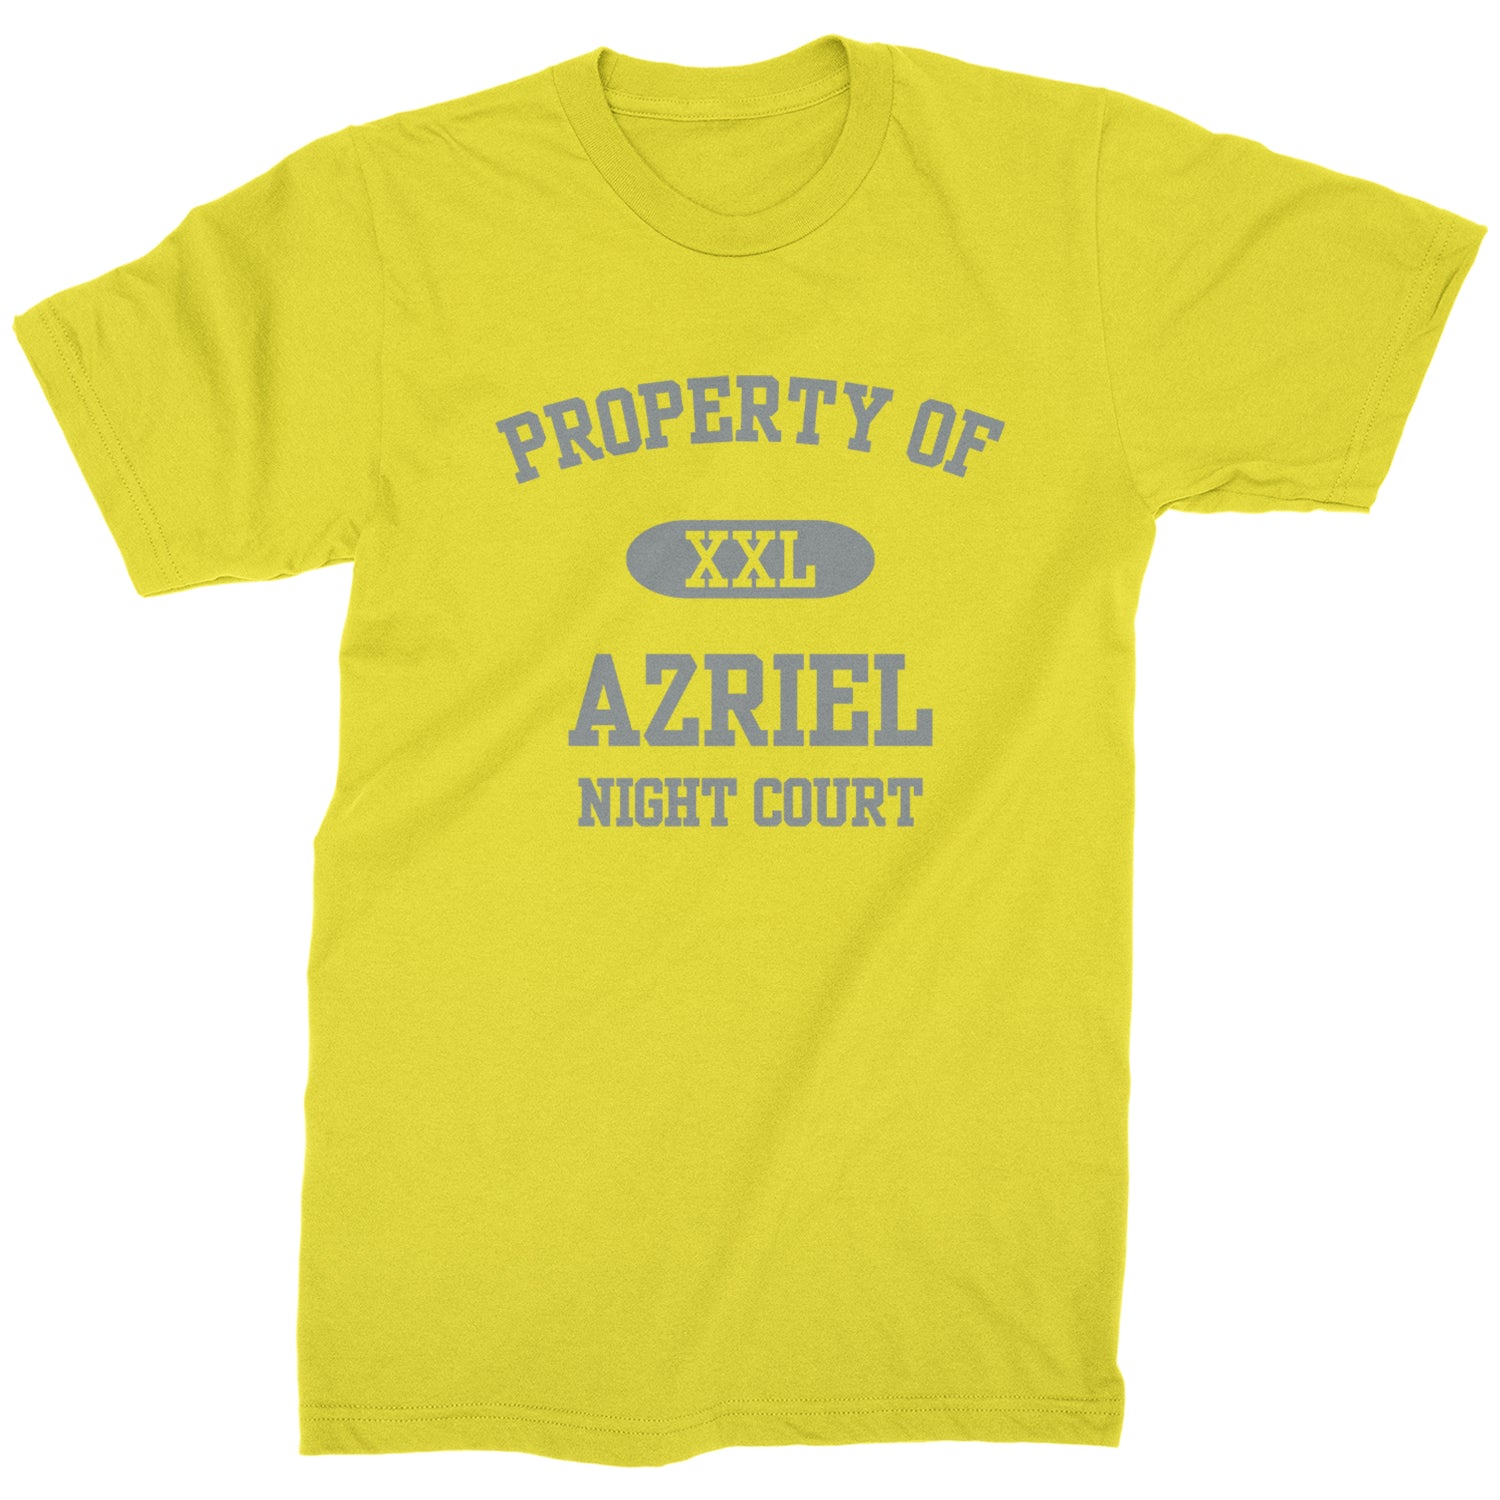 Property Of Azriel ACOTAR Mens T-shirt acotar, court, maas, tamlin, thorns by Expression Tees